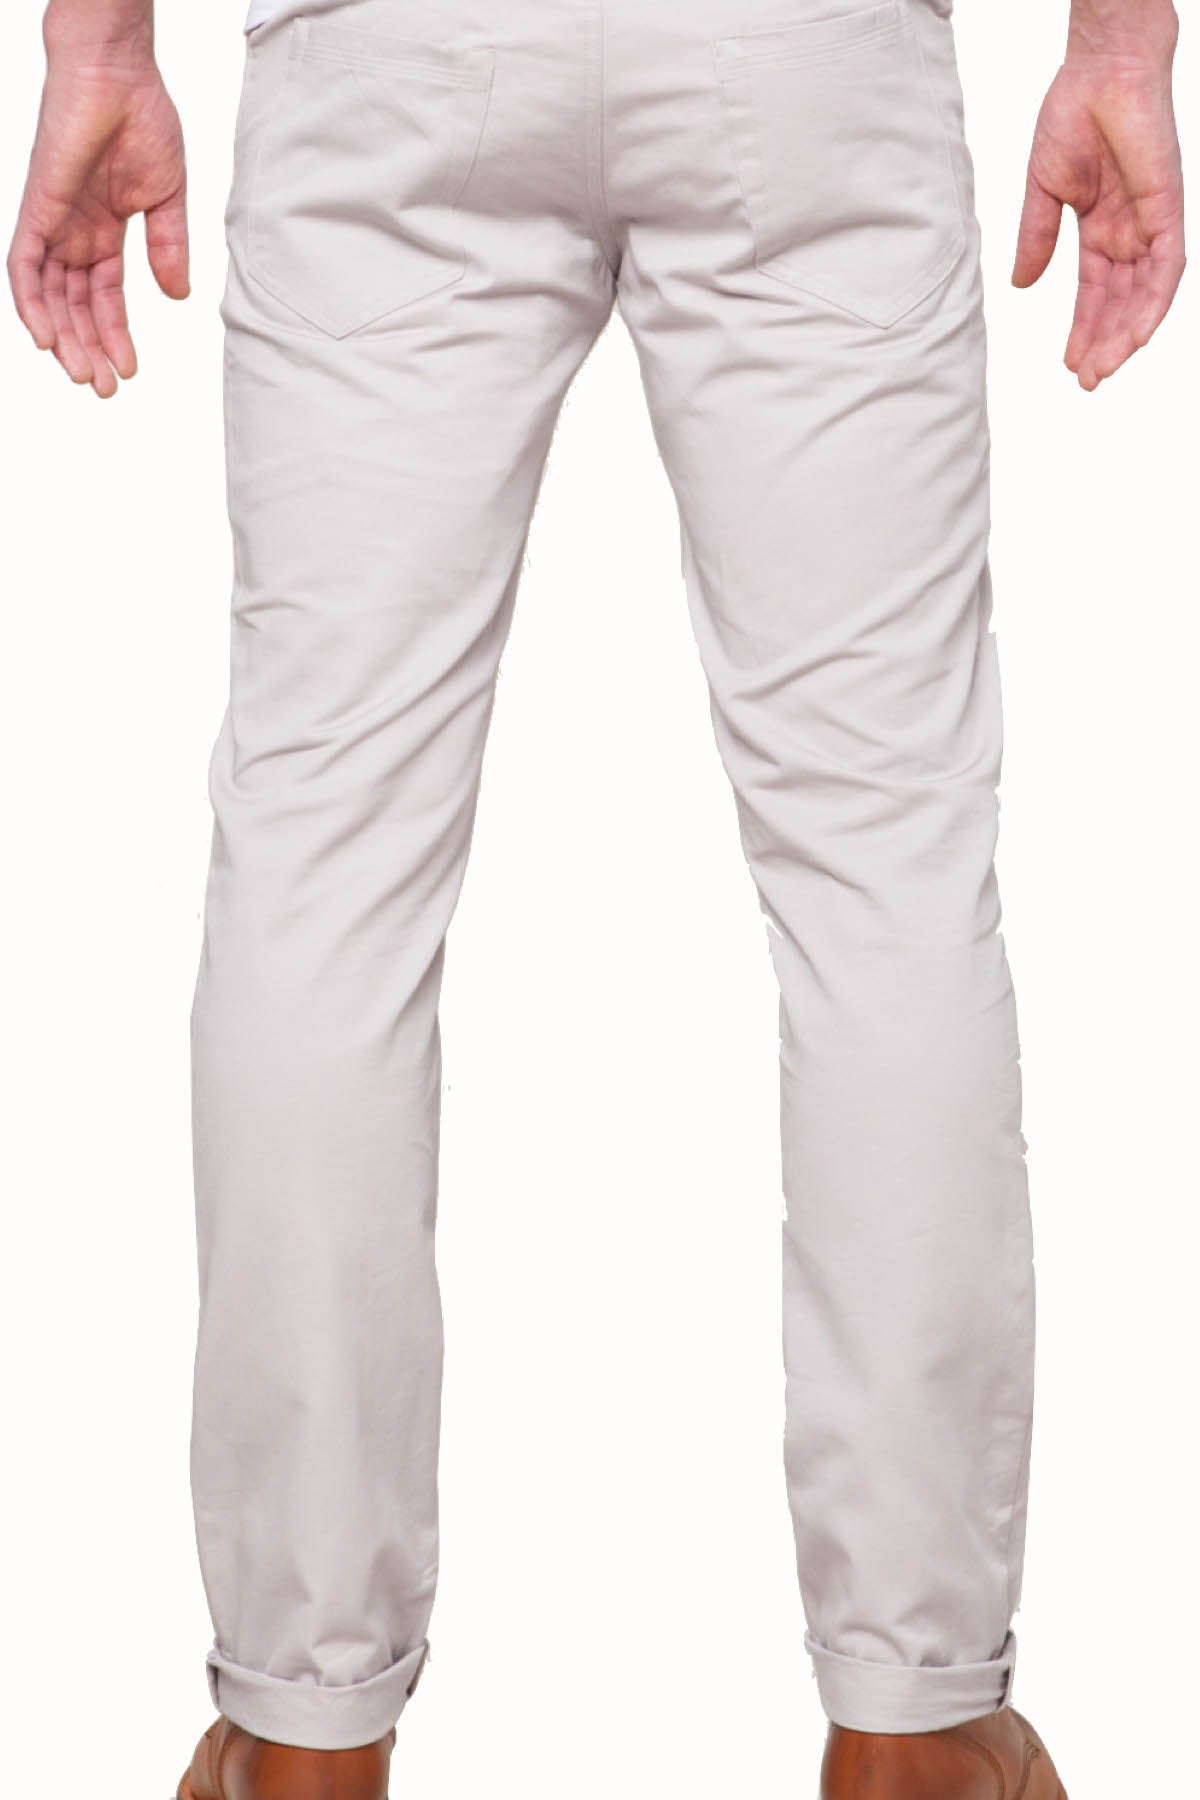 Something Strong Light Grey Straight Leg 5-pocket Pant